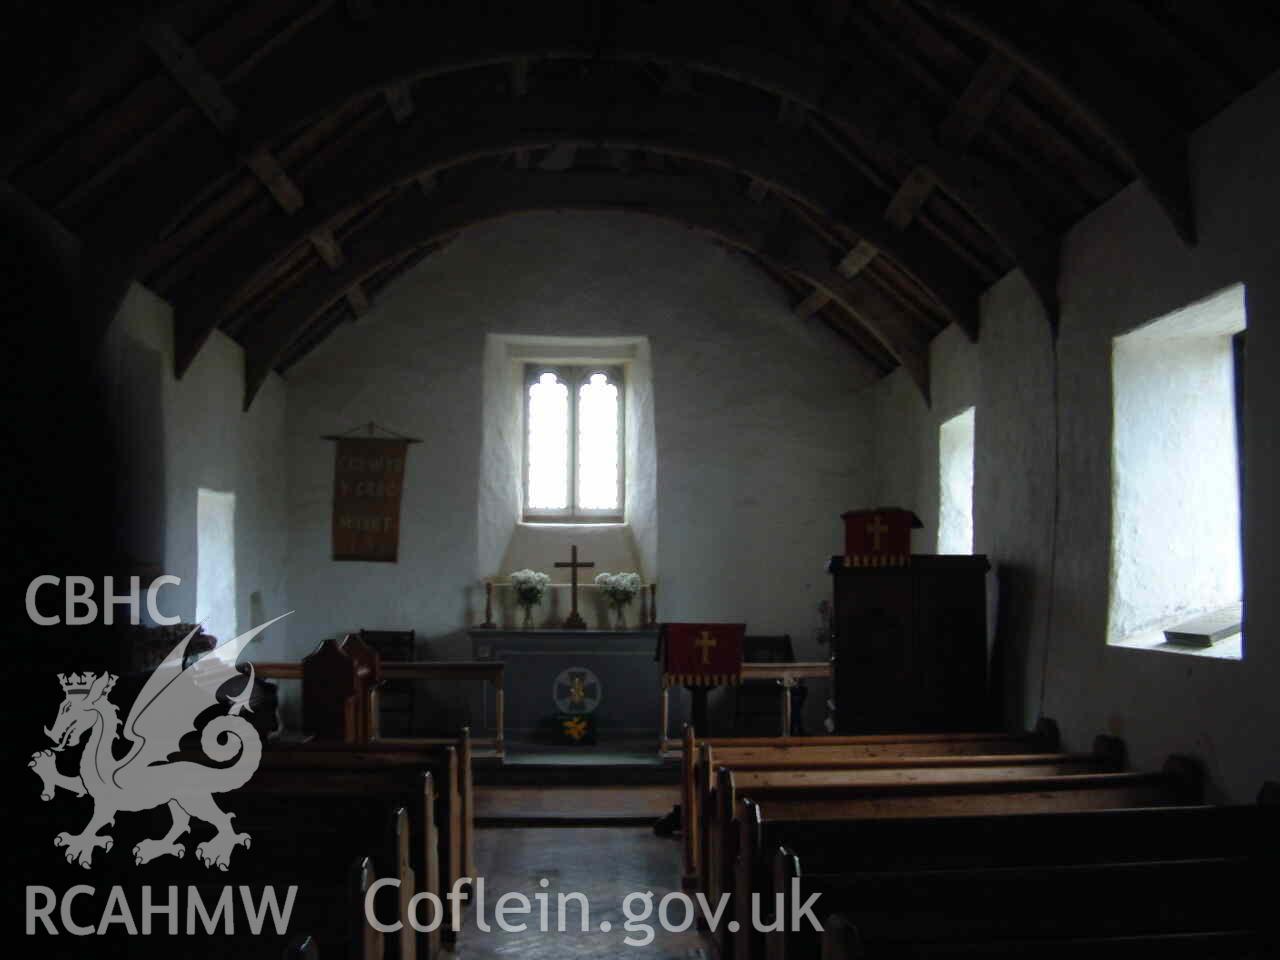 Photograph showing Church at Mwnt interior, taken by John Latham, 2003.